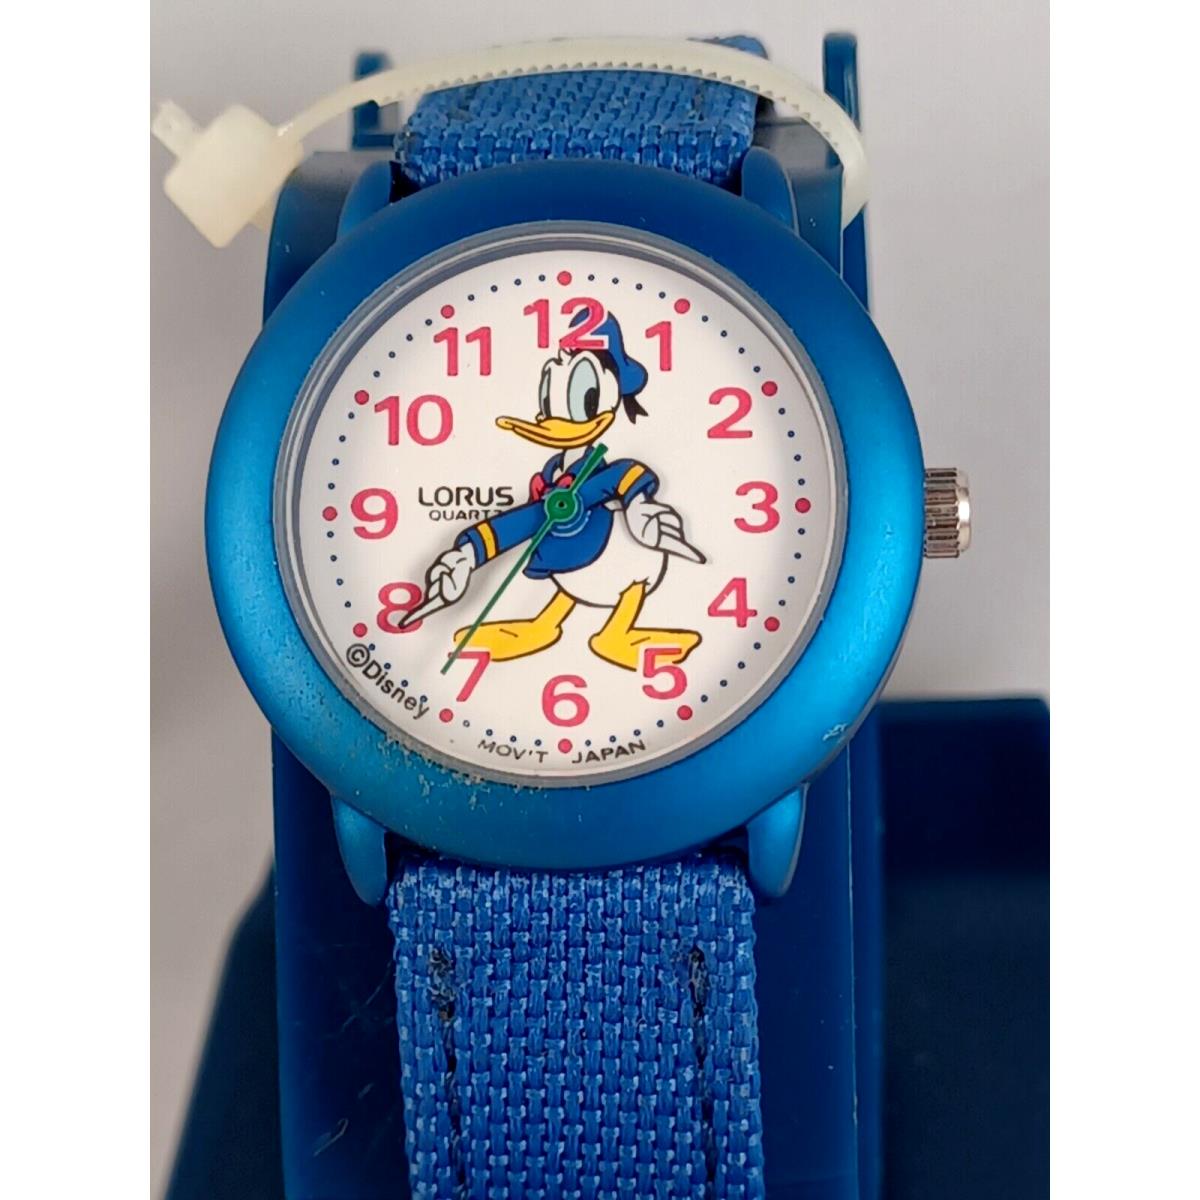 Donald Duck Lorus Disney Watch Mib Blue Case Arms Move Vtg 1990s Quartz Analog